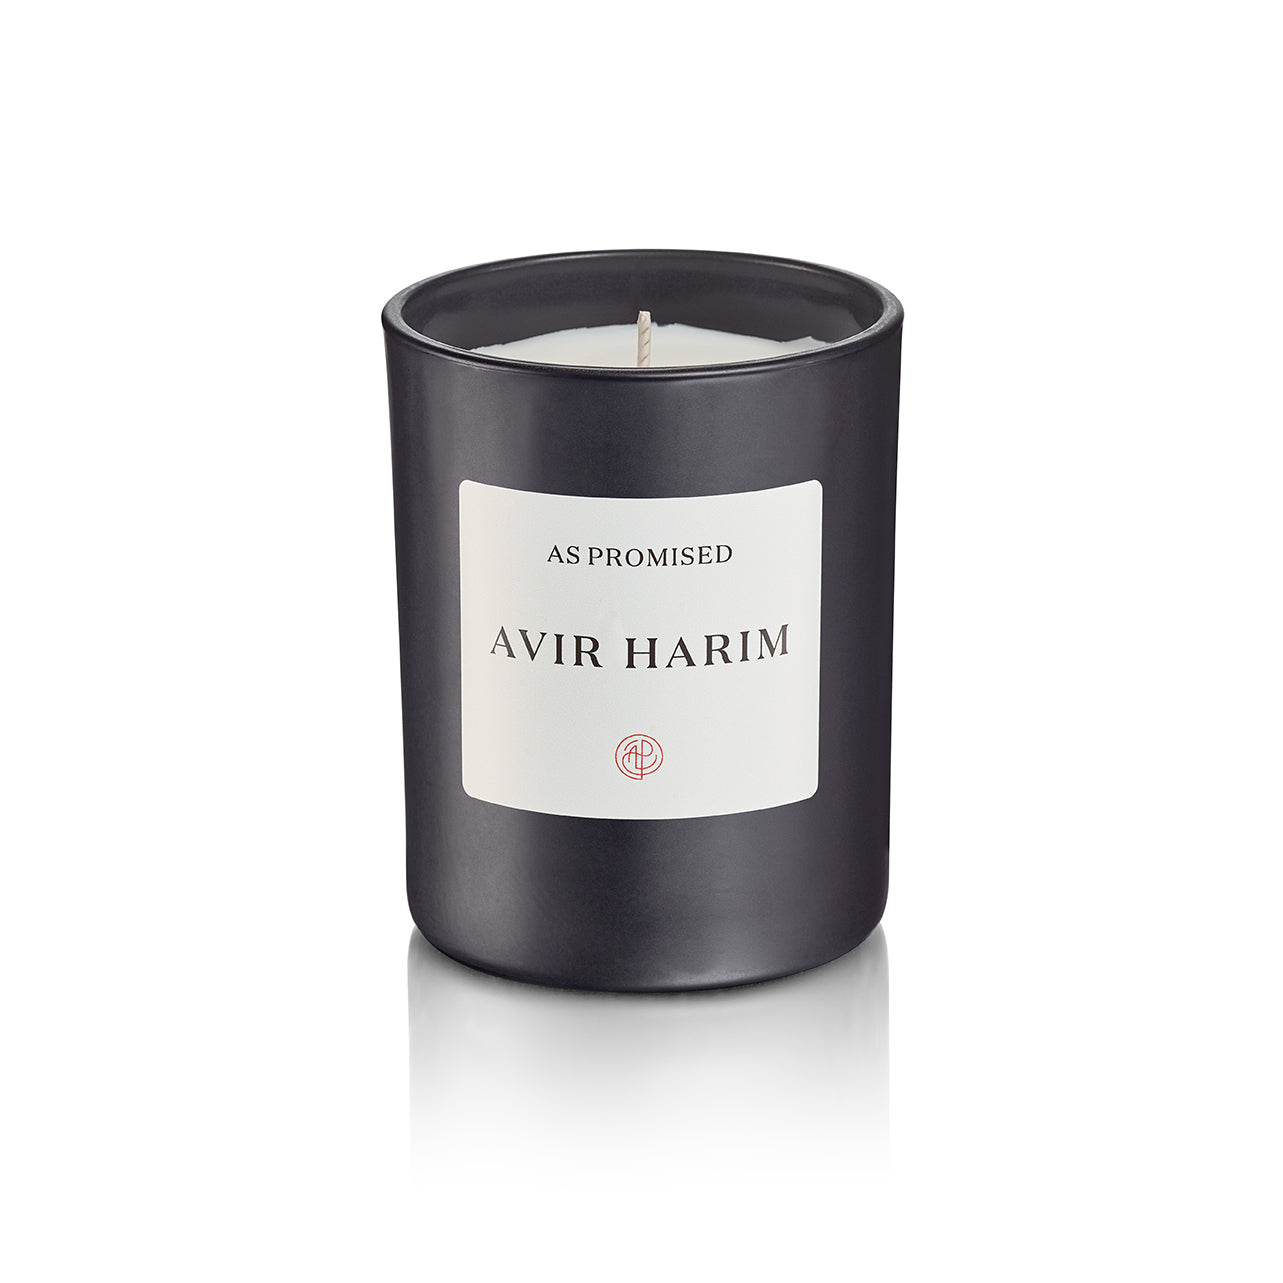 Avir Harim Candle - Medium size